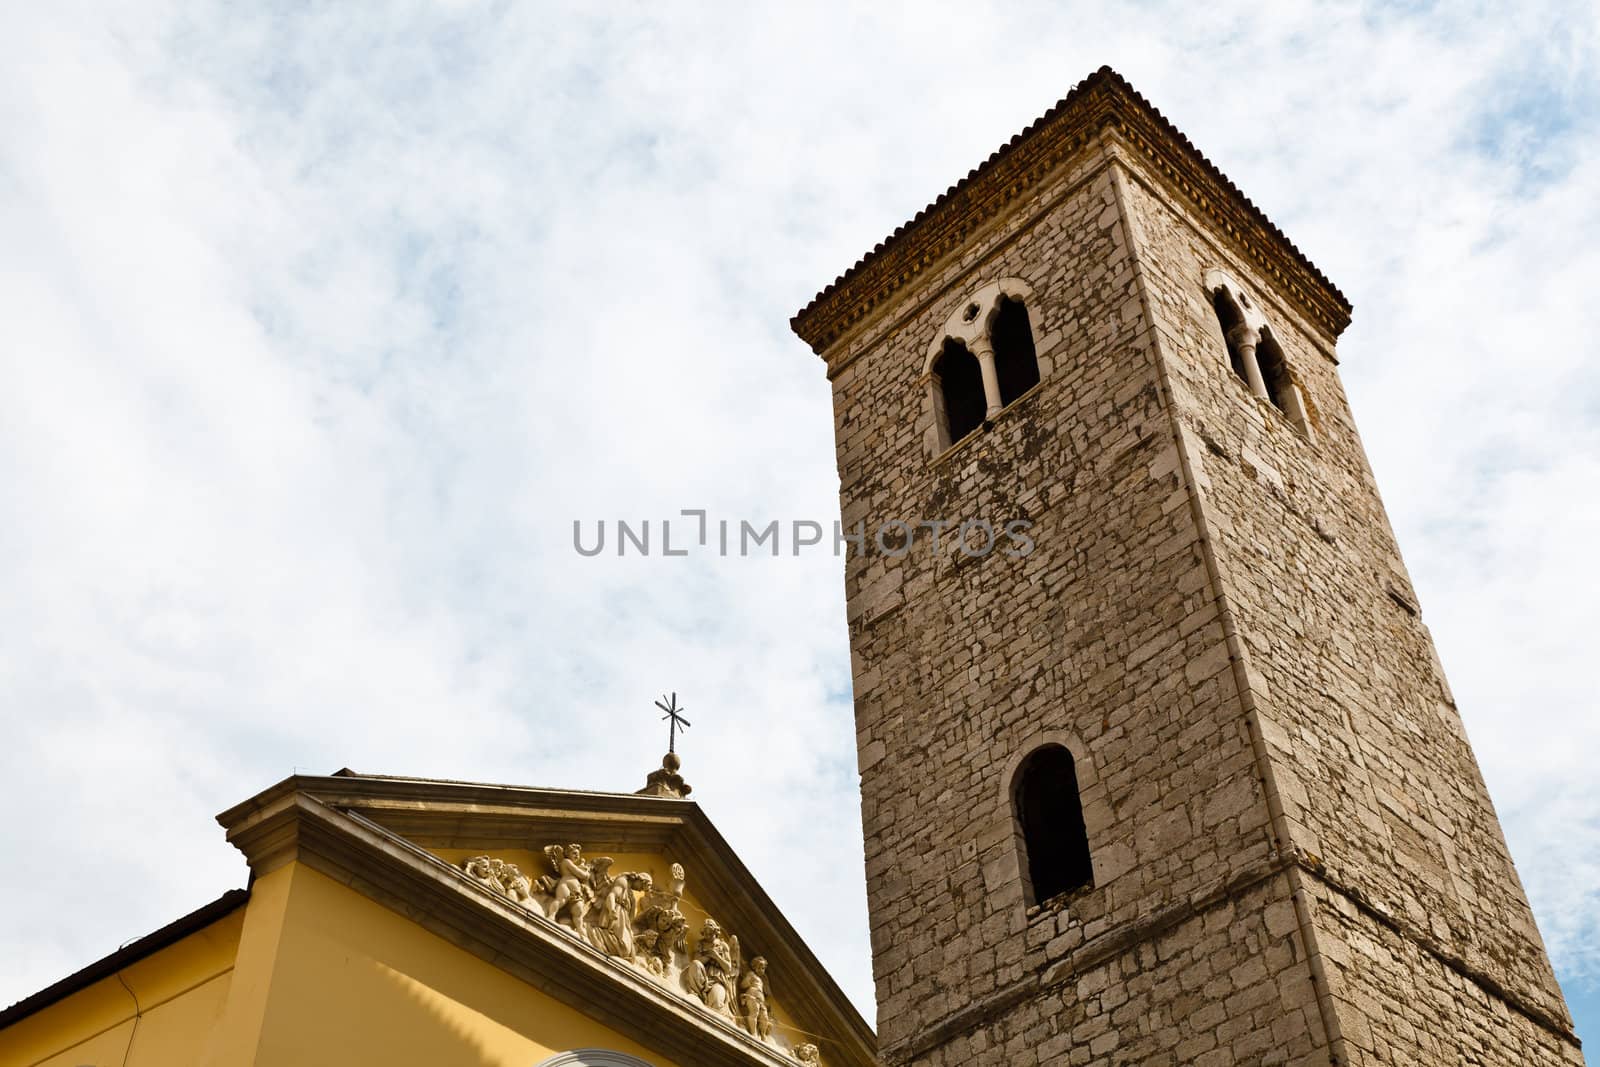 Old Church Facade and Bell Tower in Rijeka, Croatia